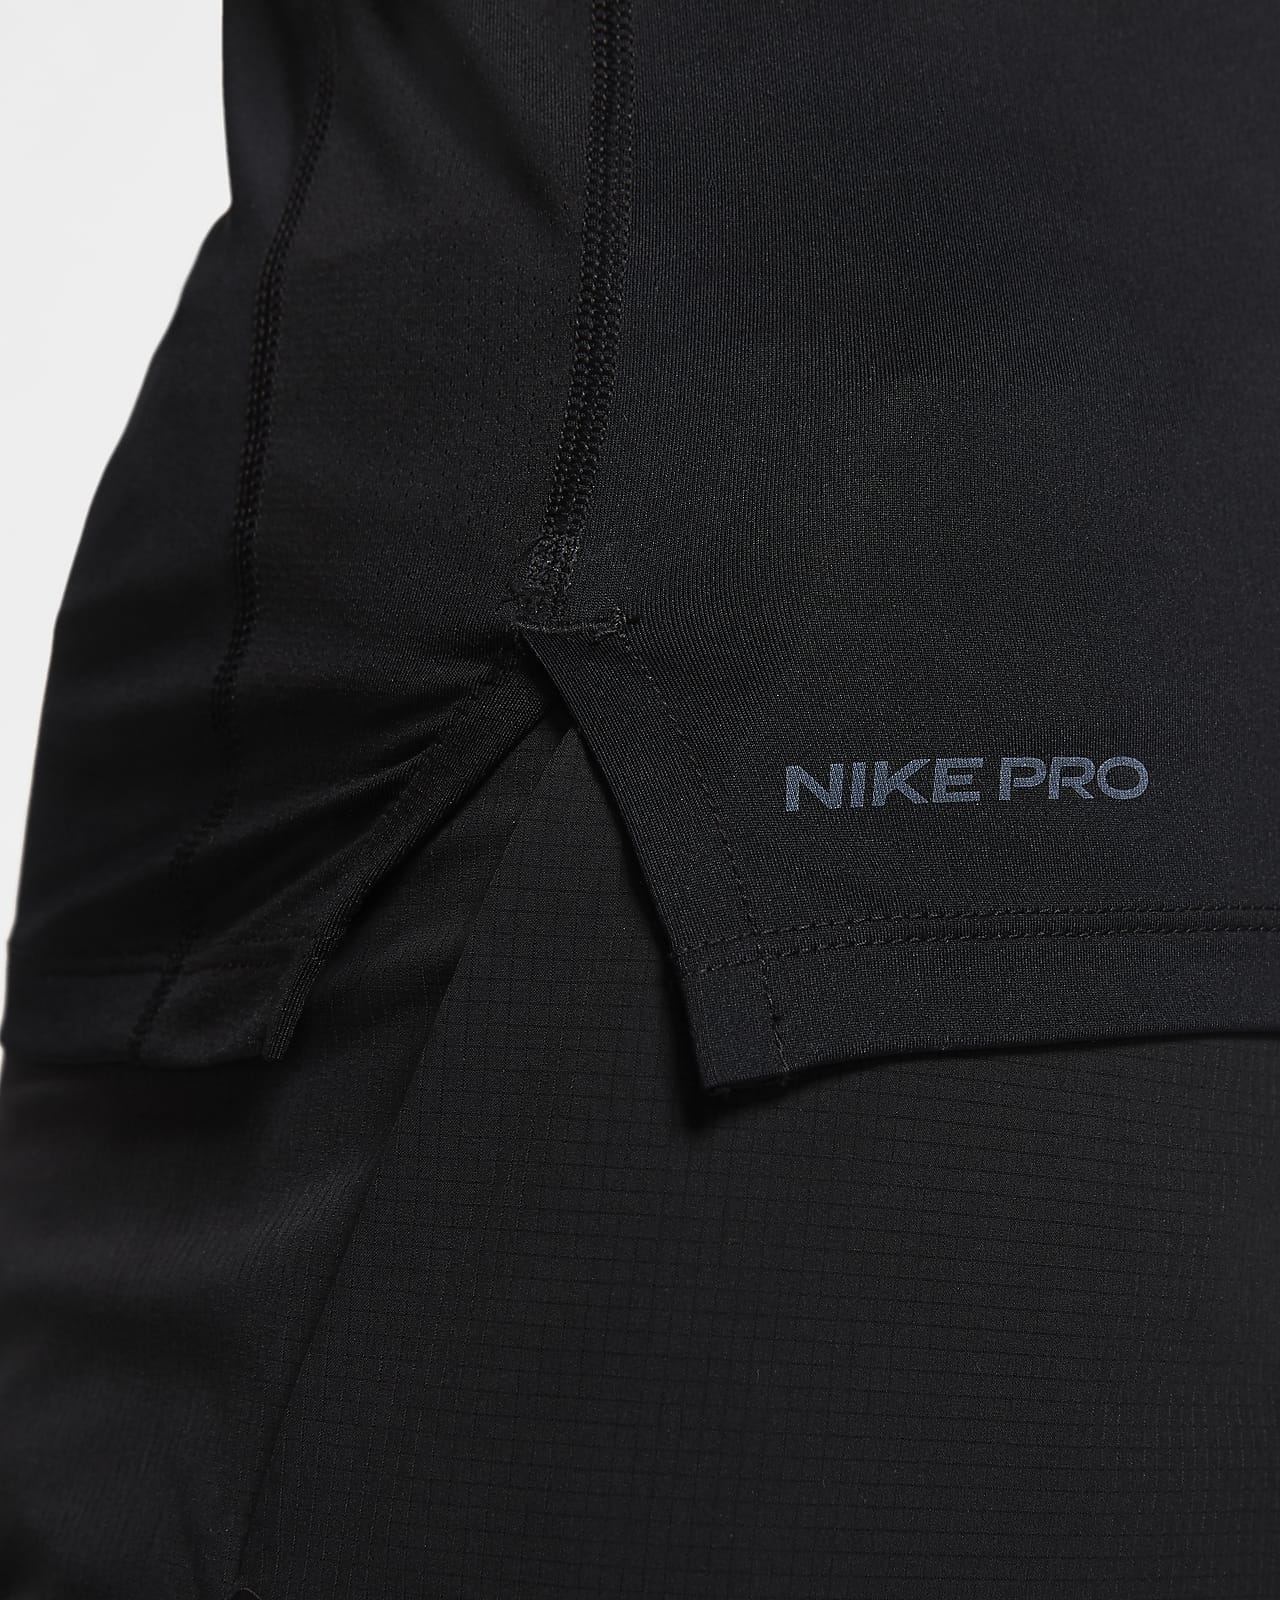 Tight-Fit Short-Sleeve Top. Nike LU